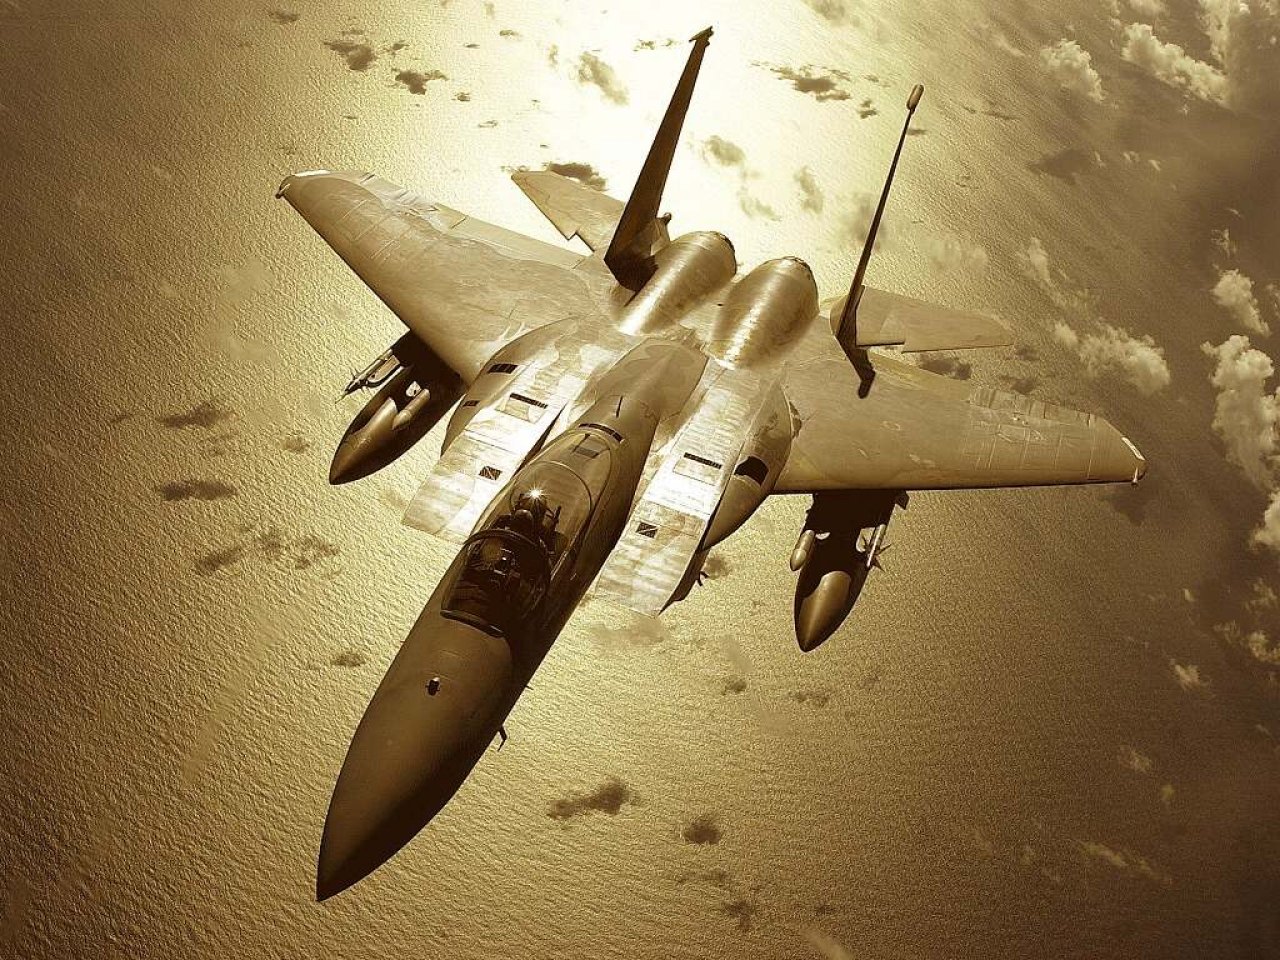 3_f15_eagle_fighter_plane_usairforce_aviation_wallpaper_x.jpg